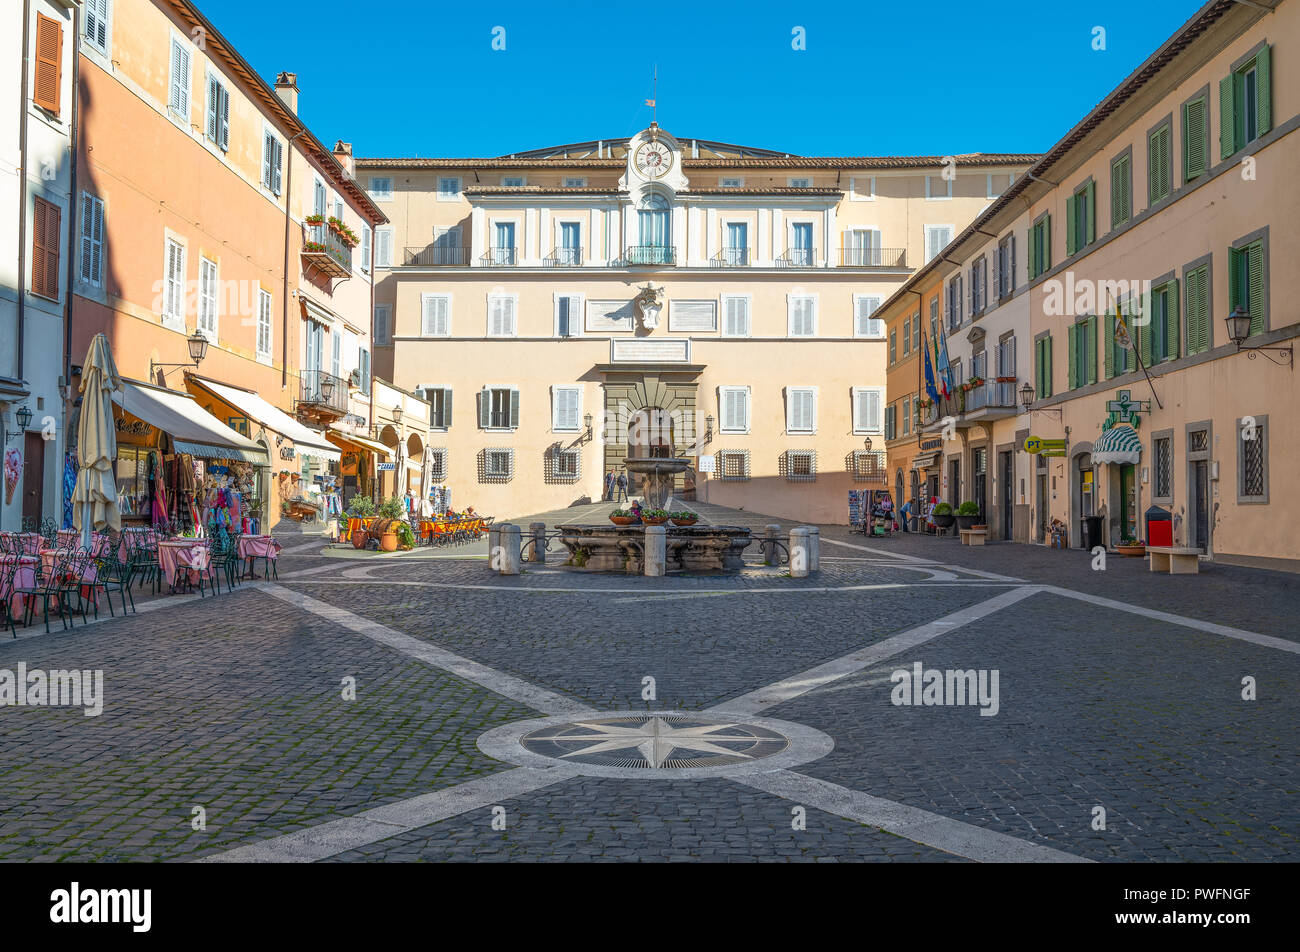 Castelgandolfo, Italy - April 21, 2017: The main facade of the Aposolic palace, summer residence of the Popes, seen from Della Liberta square Stock Photo